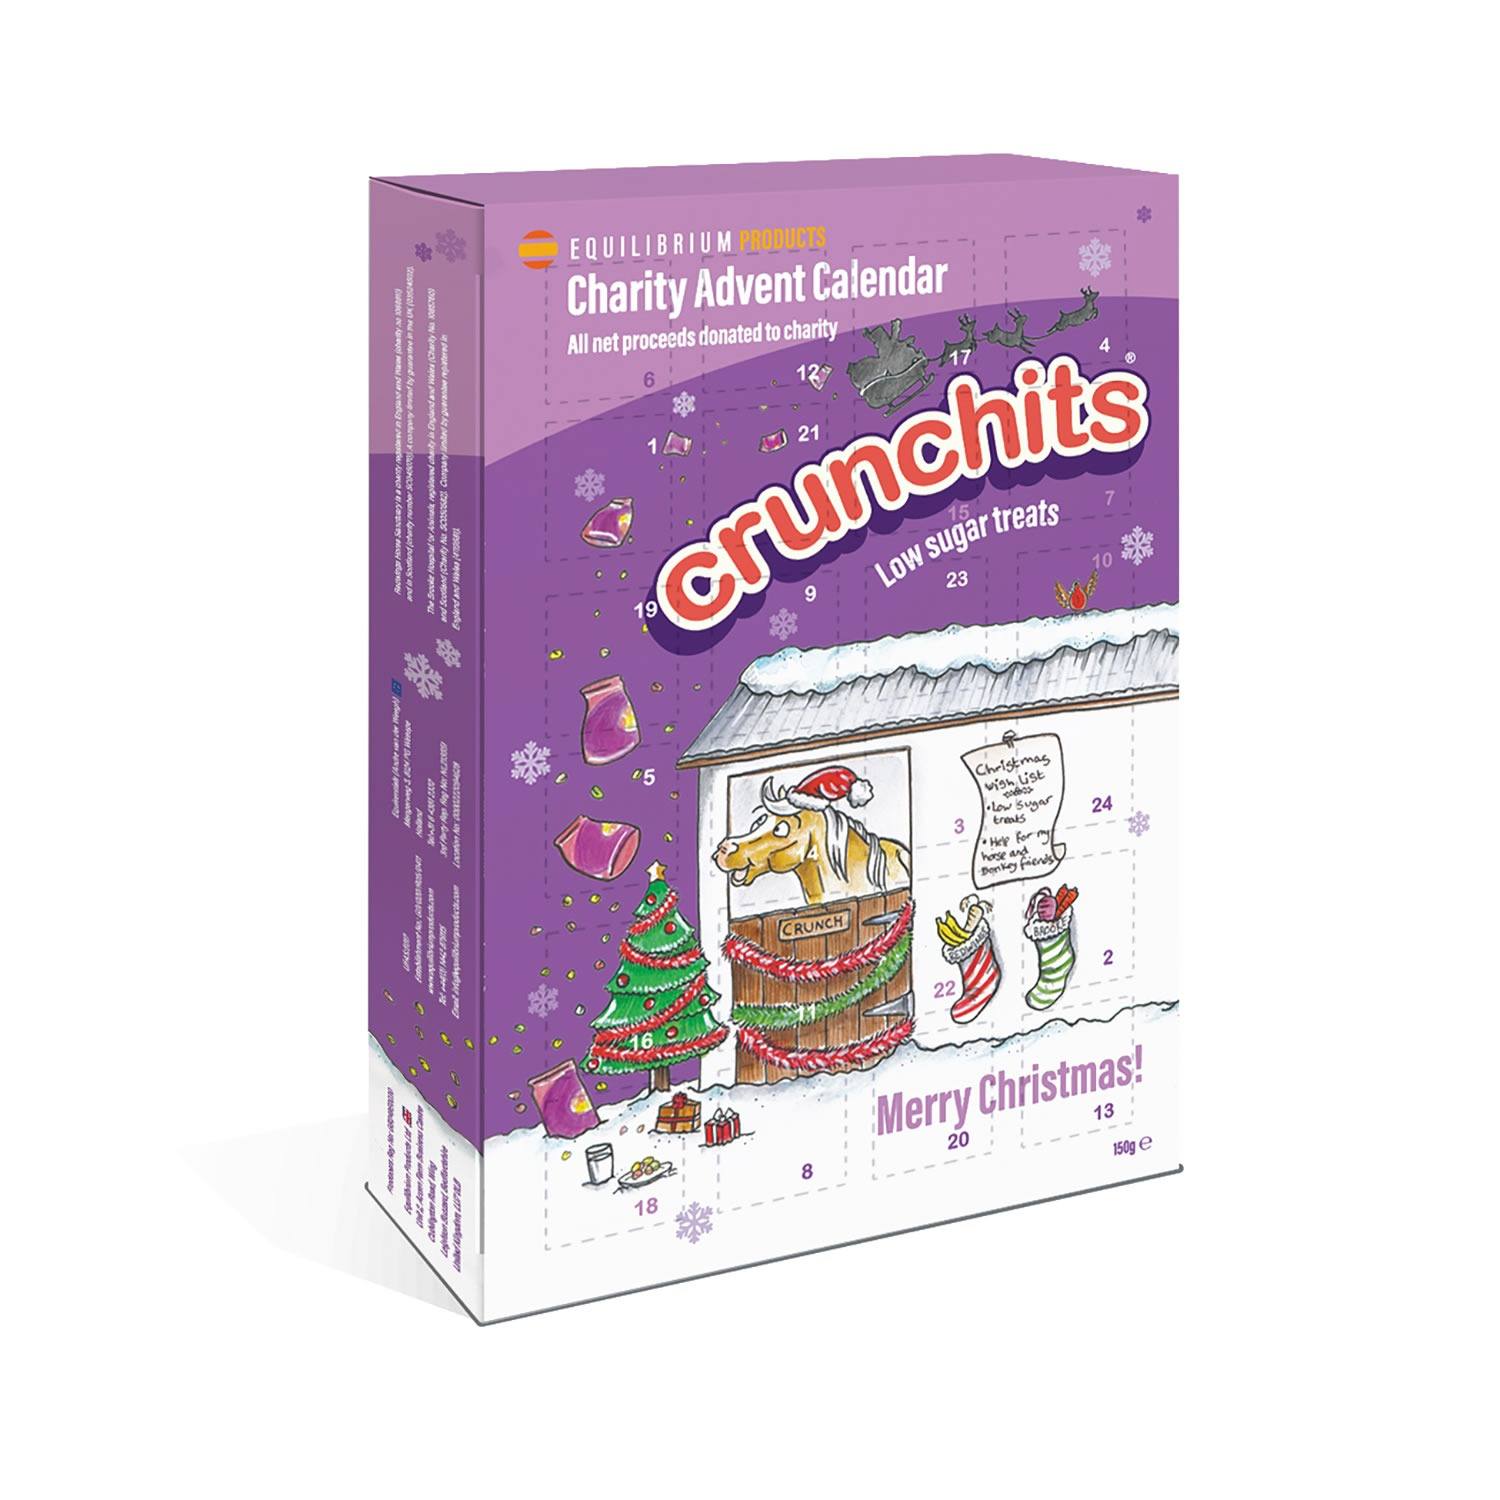 Equilibrium Crunchits Christmas Charity Advent Calendar VioVet